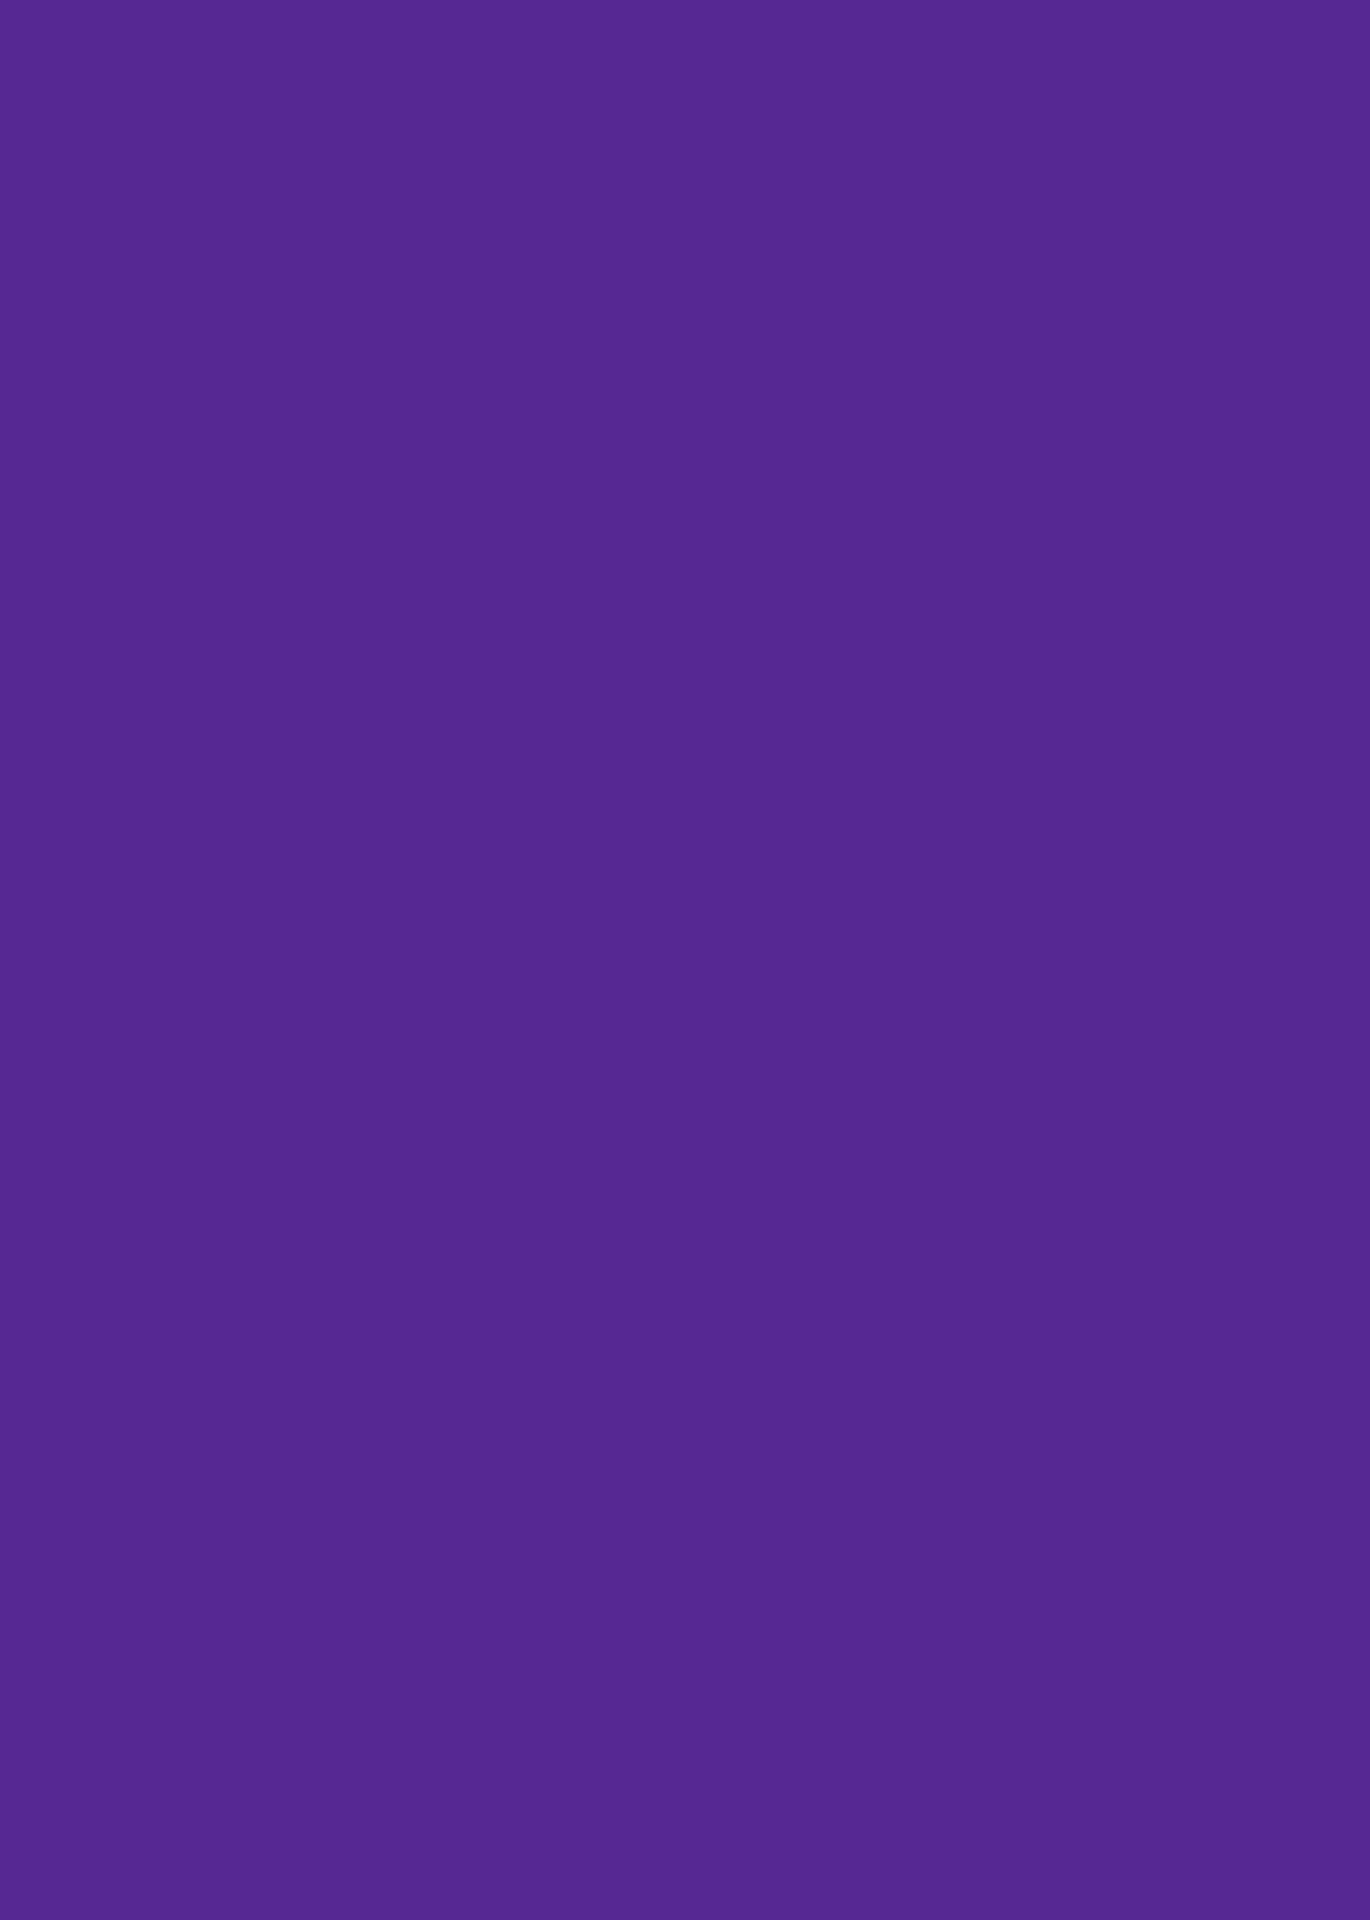 HI-Purple